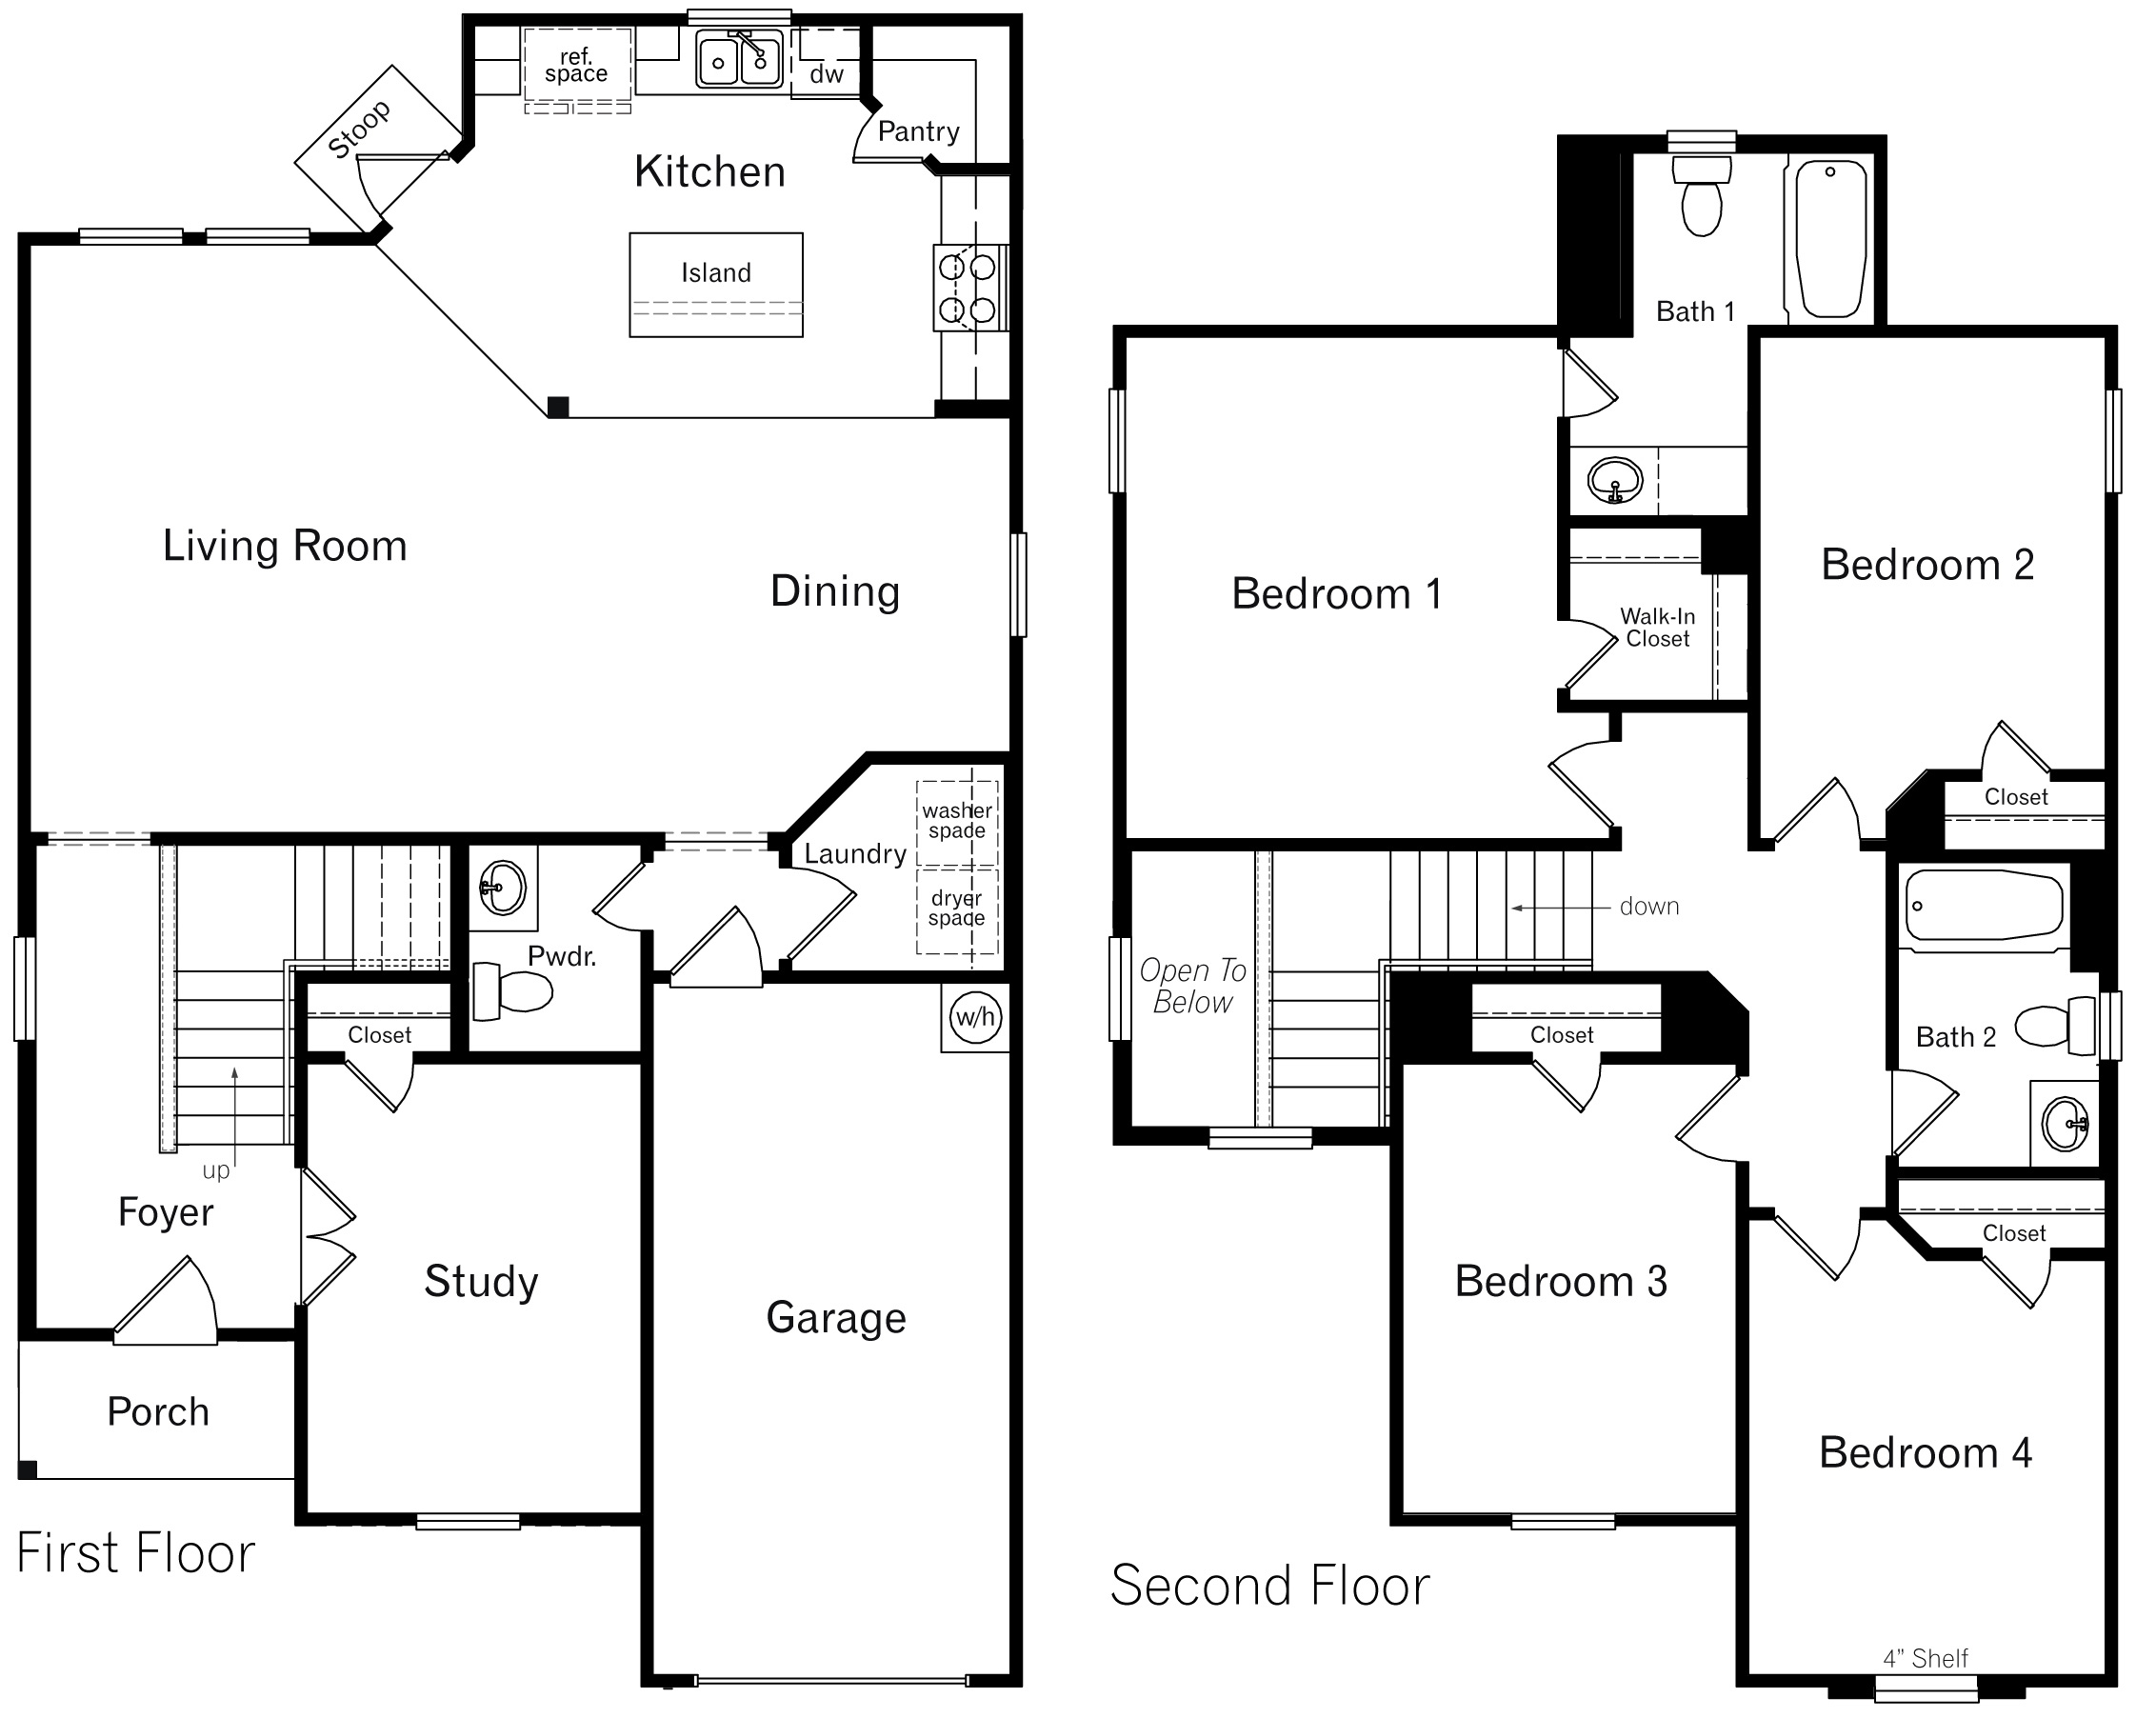 DR Horton San Antonio Redbird Ranch the ingleside floor plan 1900 square feet 4 bedrooms 2.5 bathrooms 2 story 1 car garage